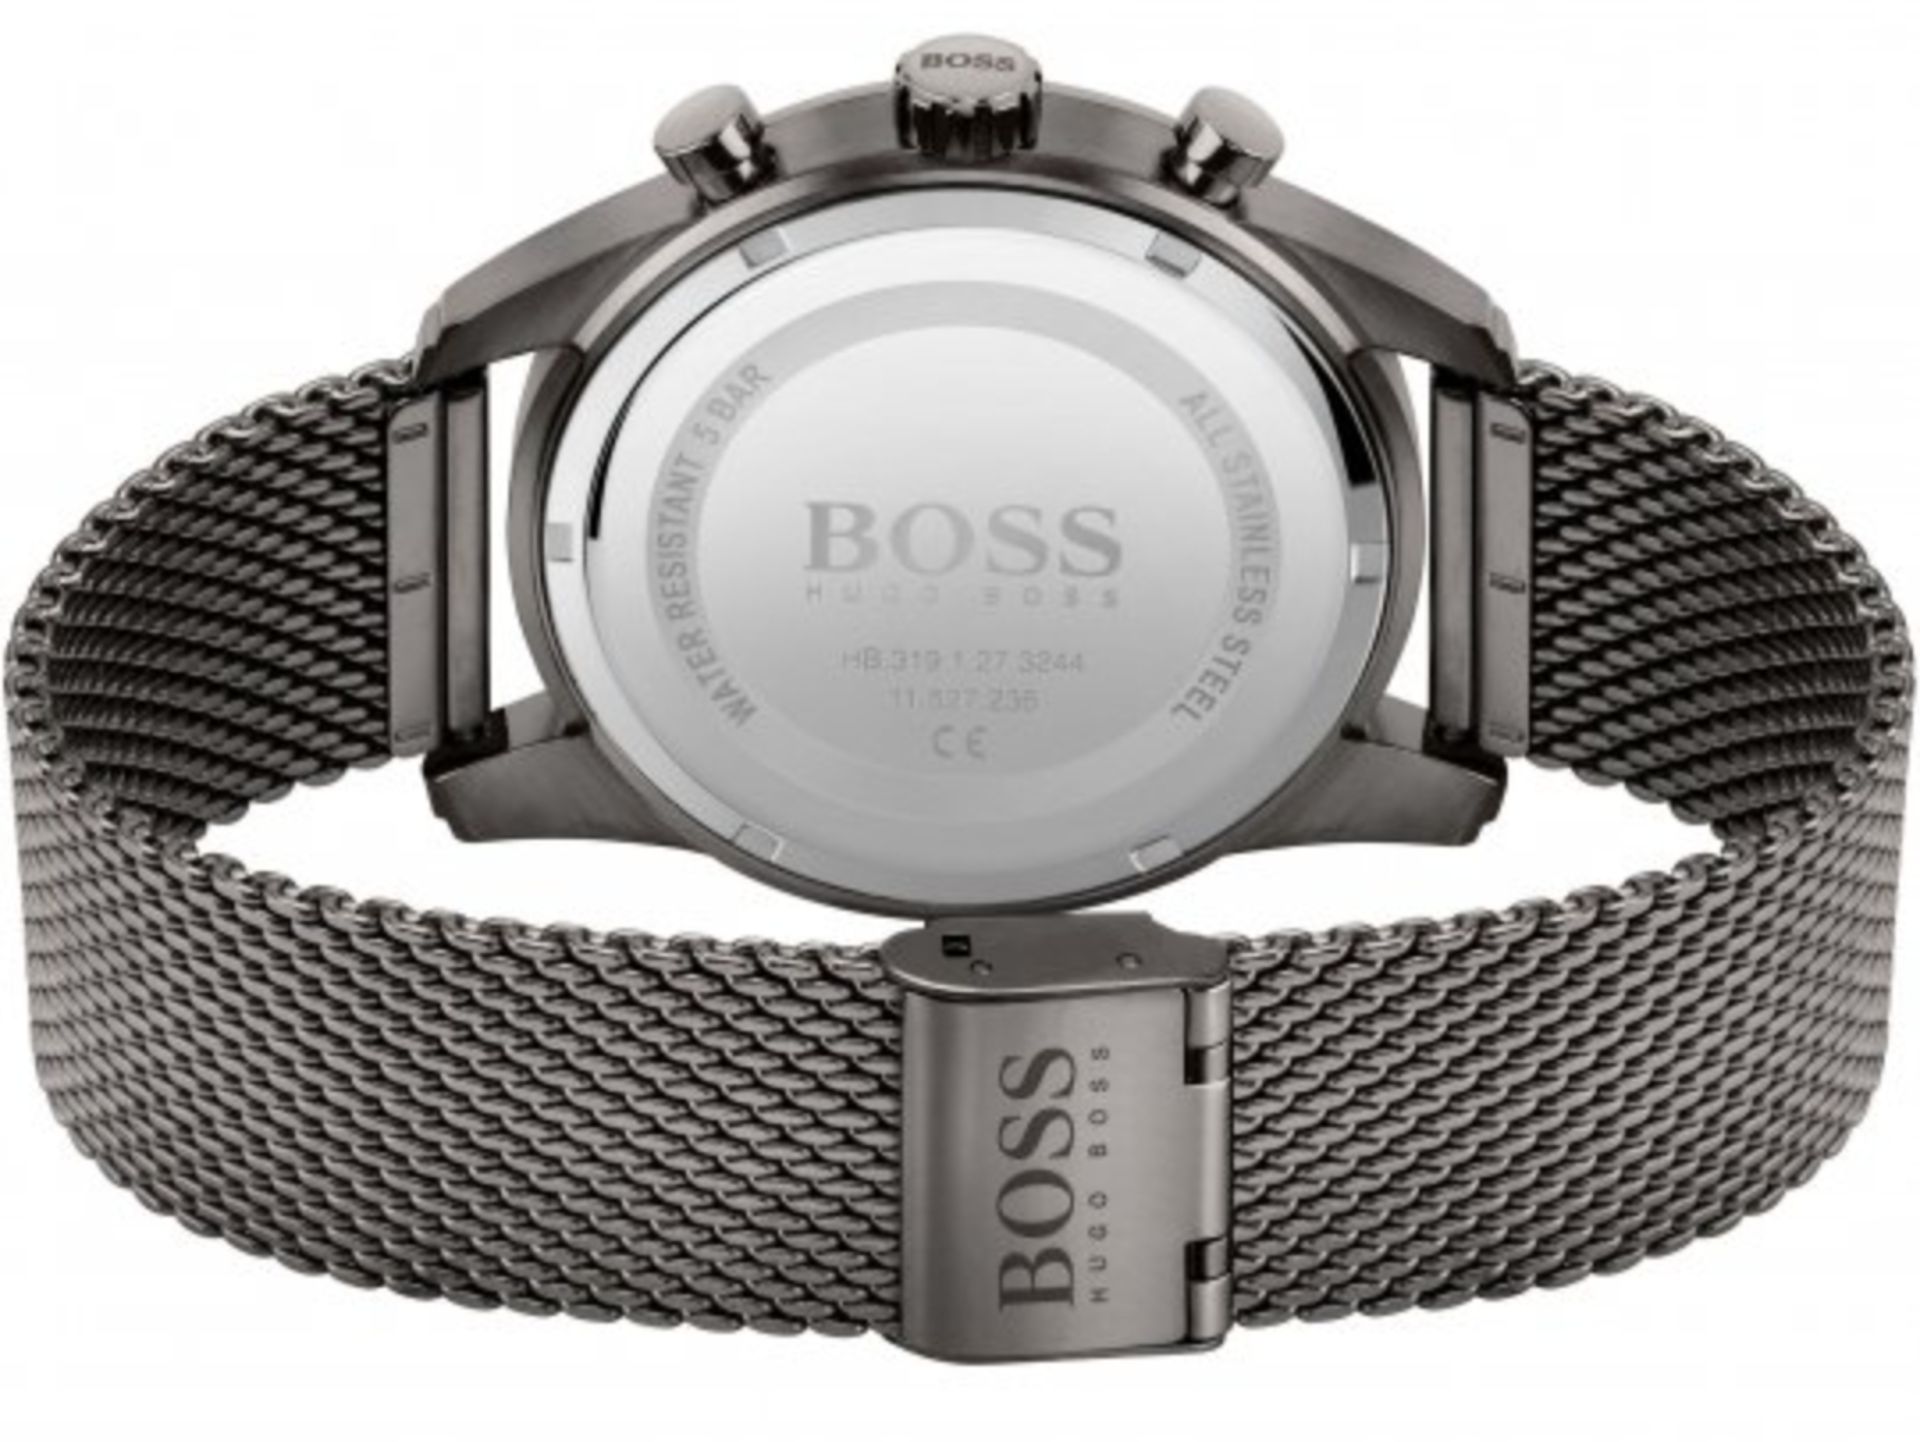 Hugo Boss 1513837 Men's Skymaster Grey Mesh Band Quartz Chronograph Watch - Image 5 of 6